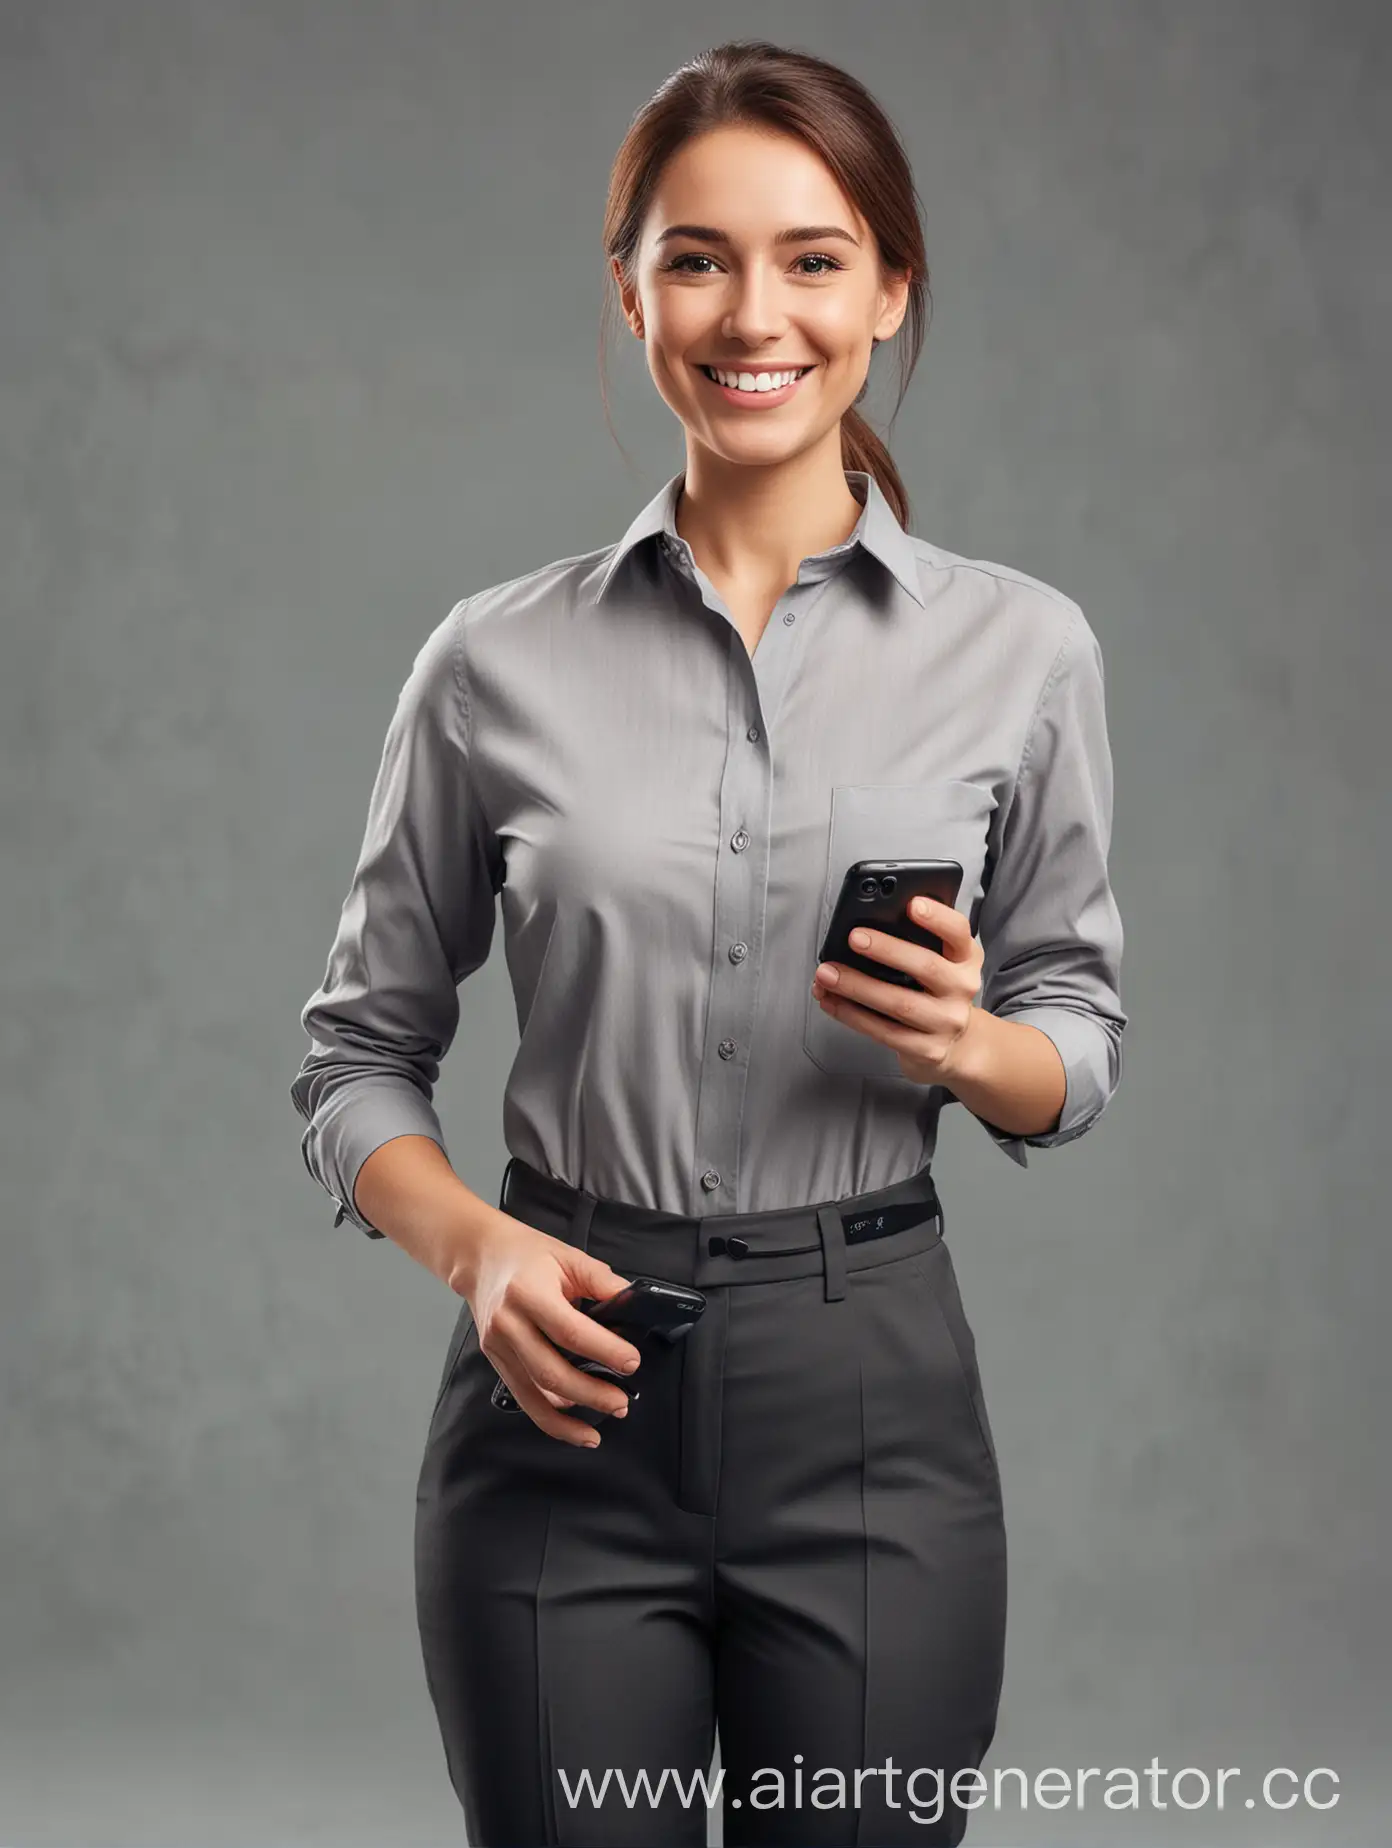 Smiling-Employee-Holding-Phone-at-Waist-Level